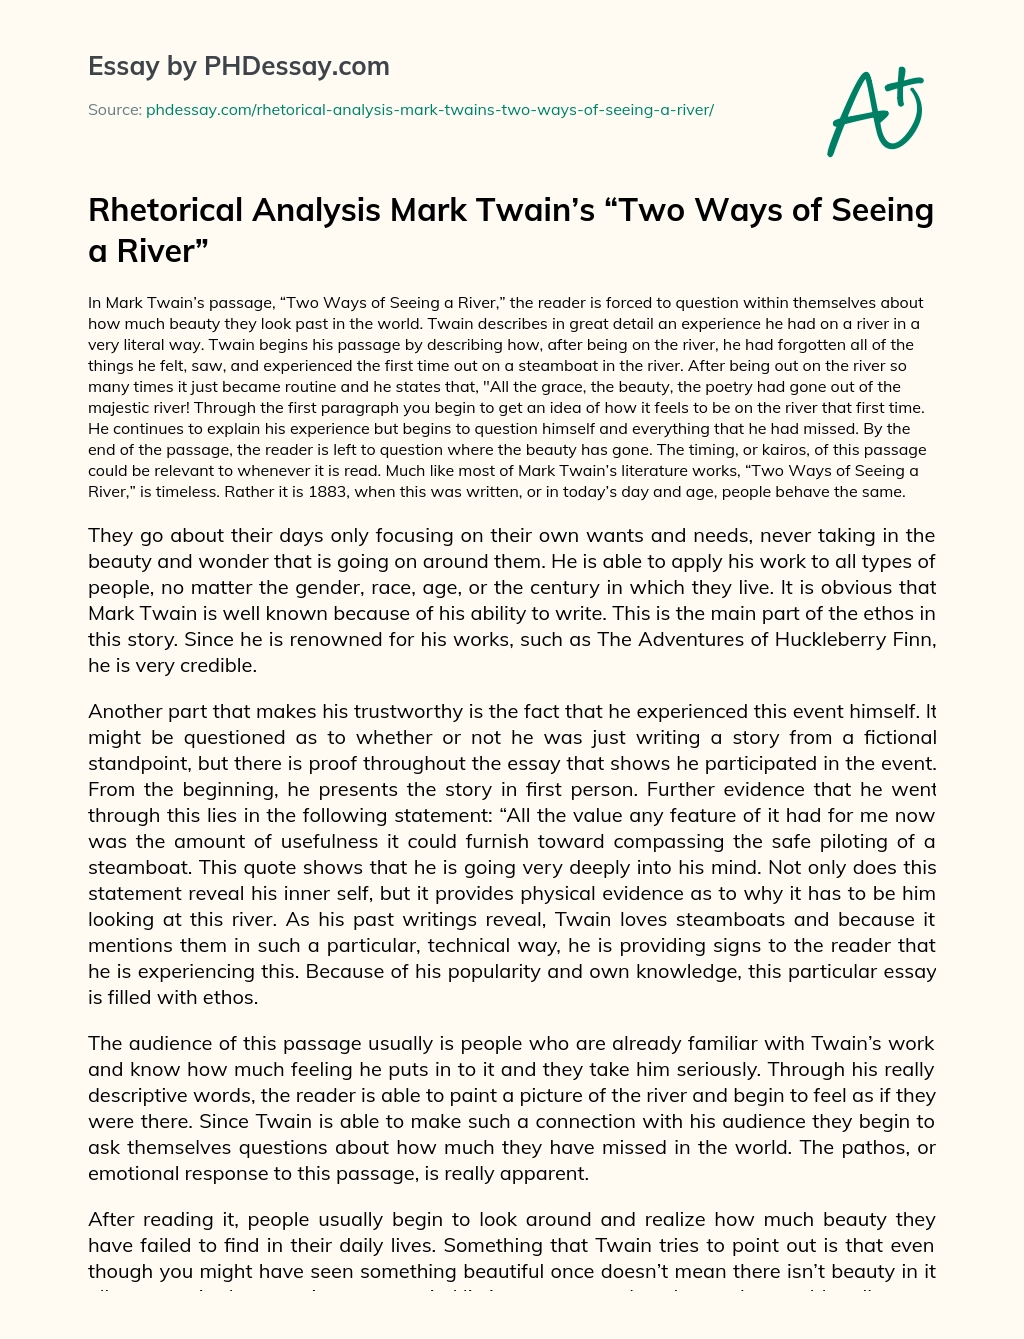 Rhetorical Analysis Mark Twain’s “Two Ways of Seeing a River” essay